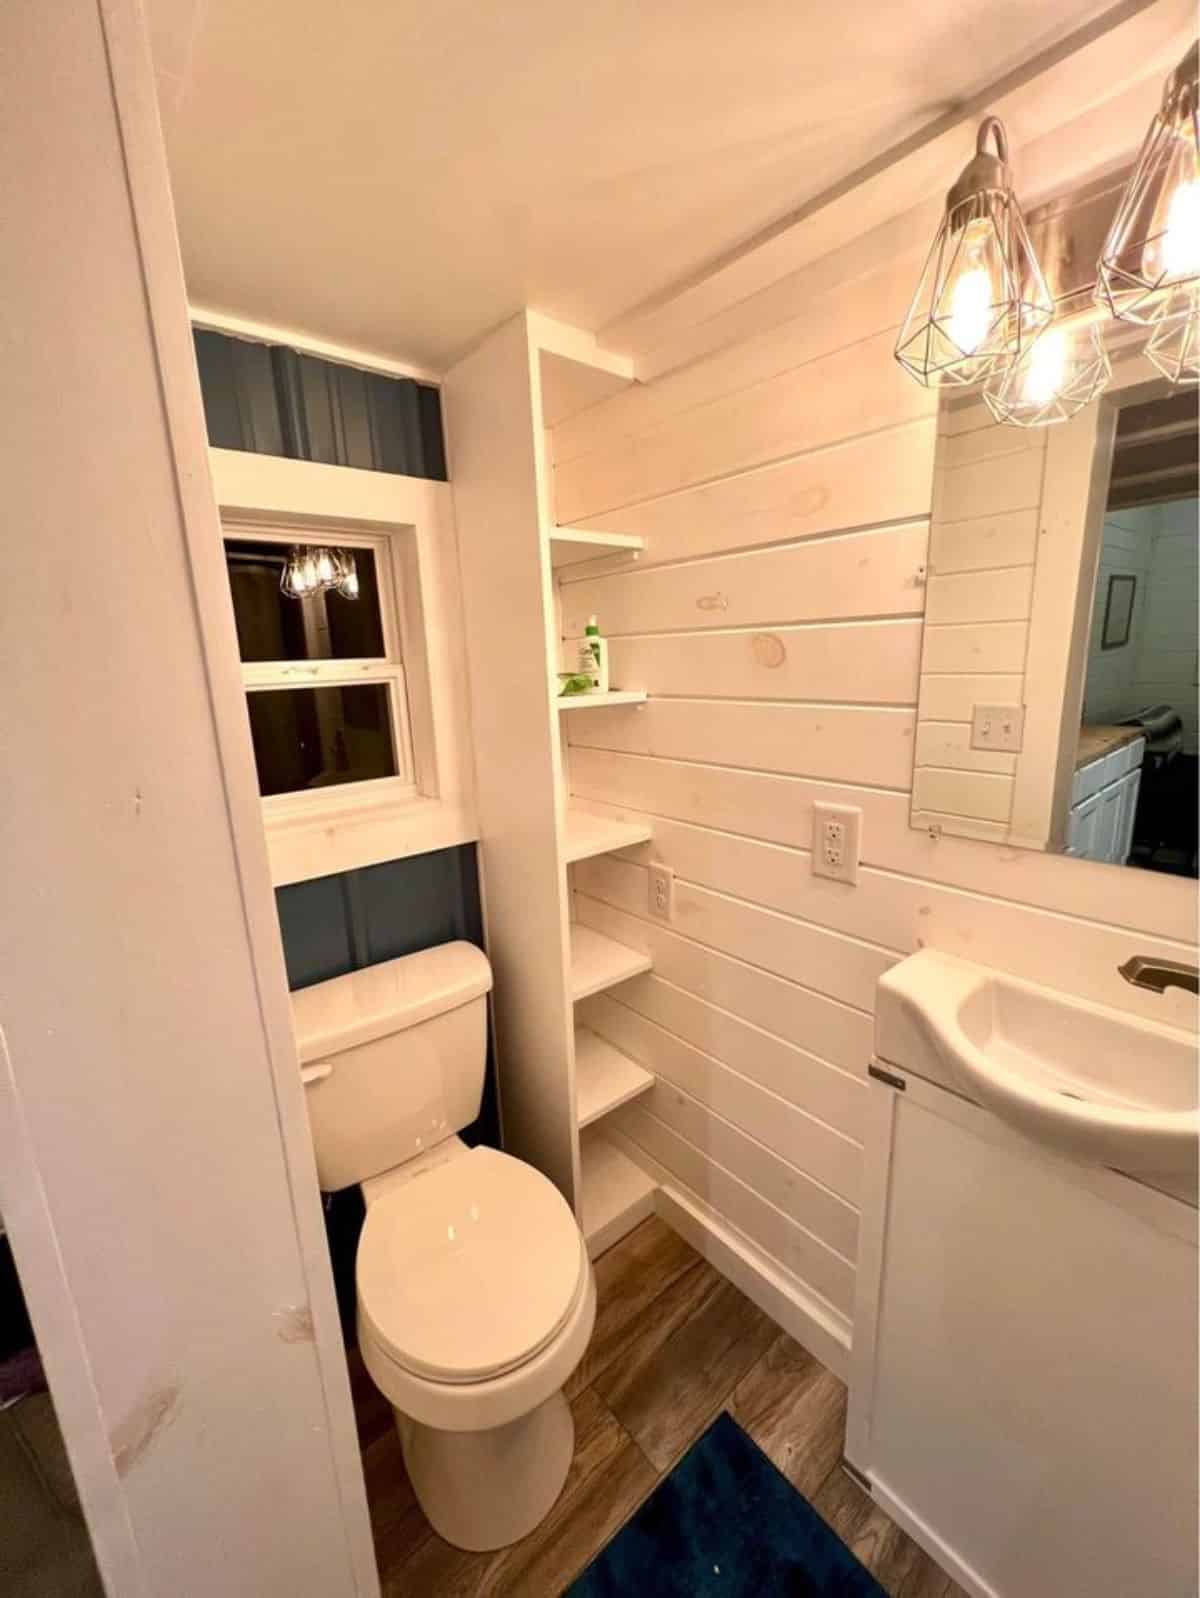 Standard toilet, sink with vanity and mirror and side racks in bathroom